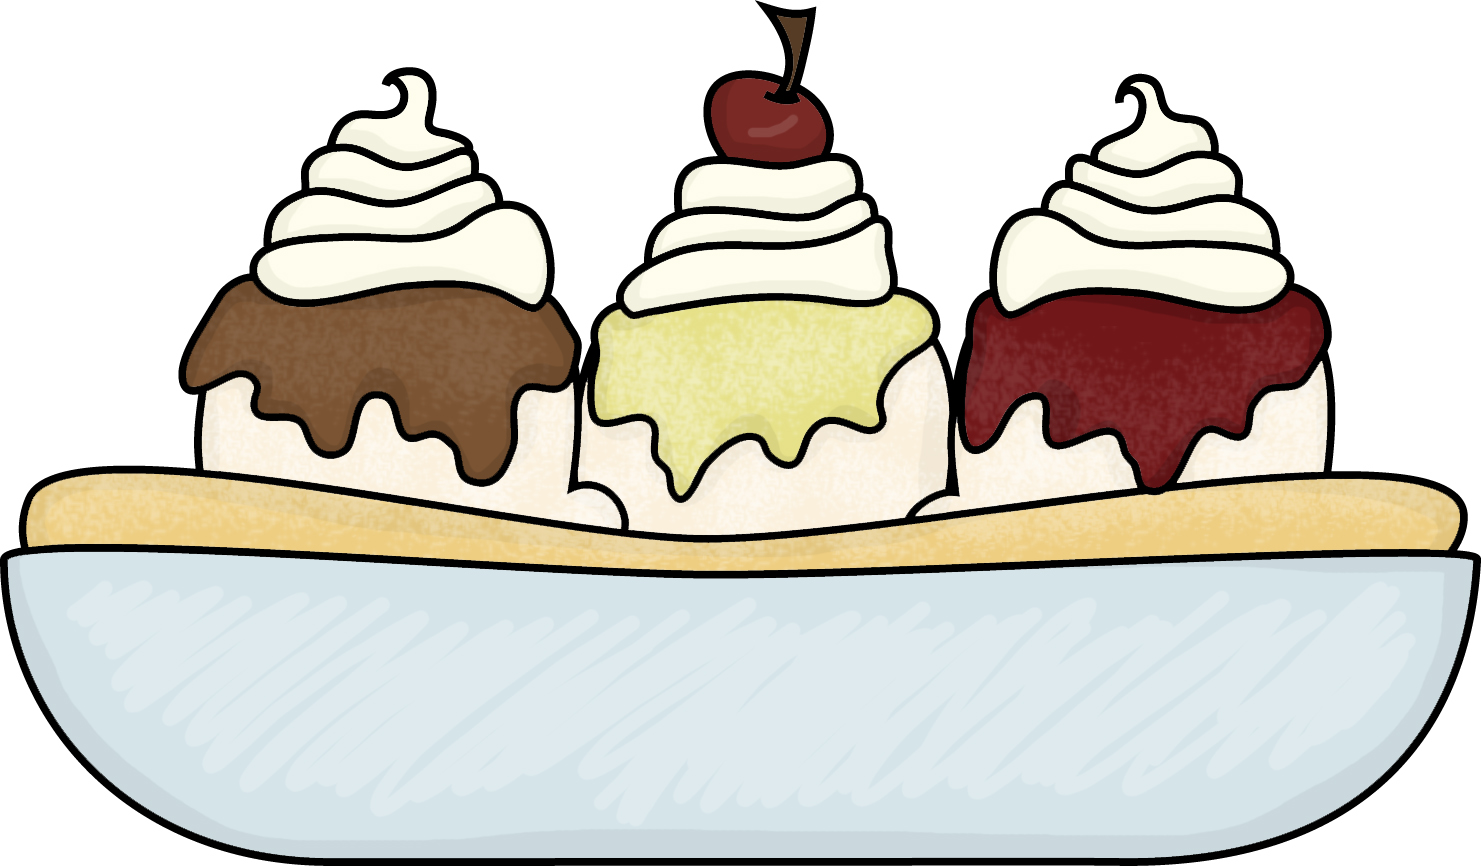 Ice cream scoop clipart sundae clip art ziqkwz